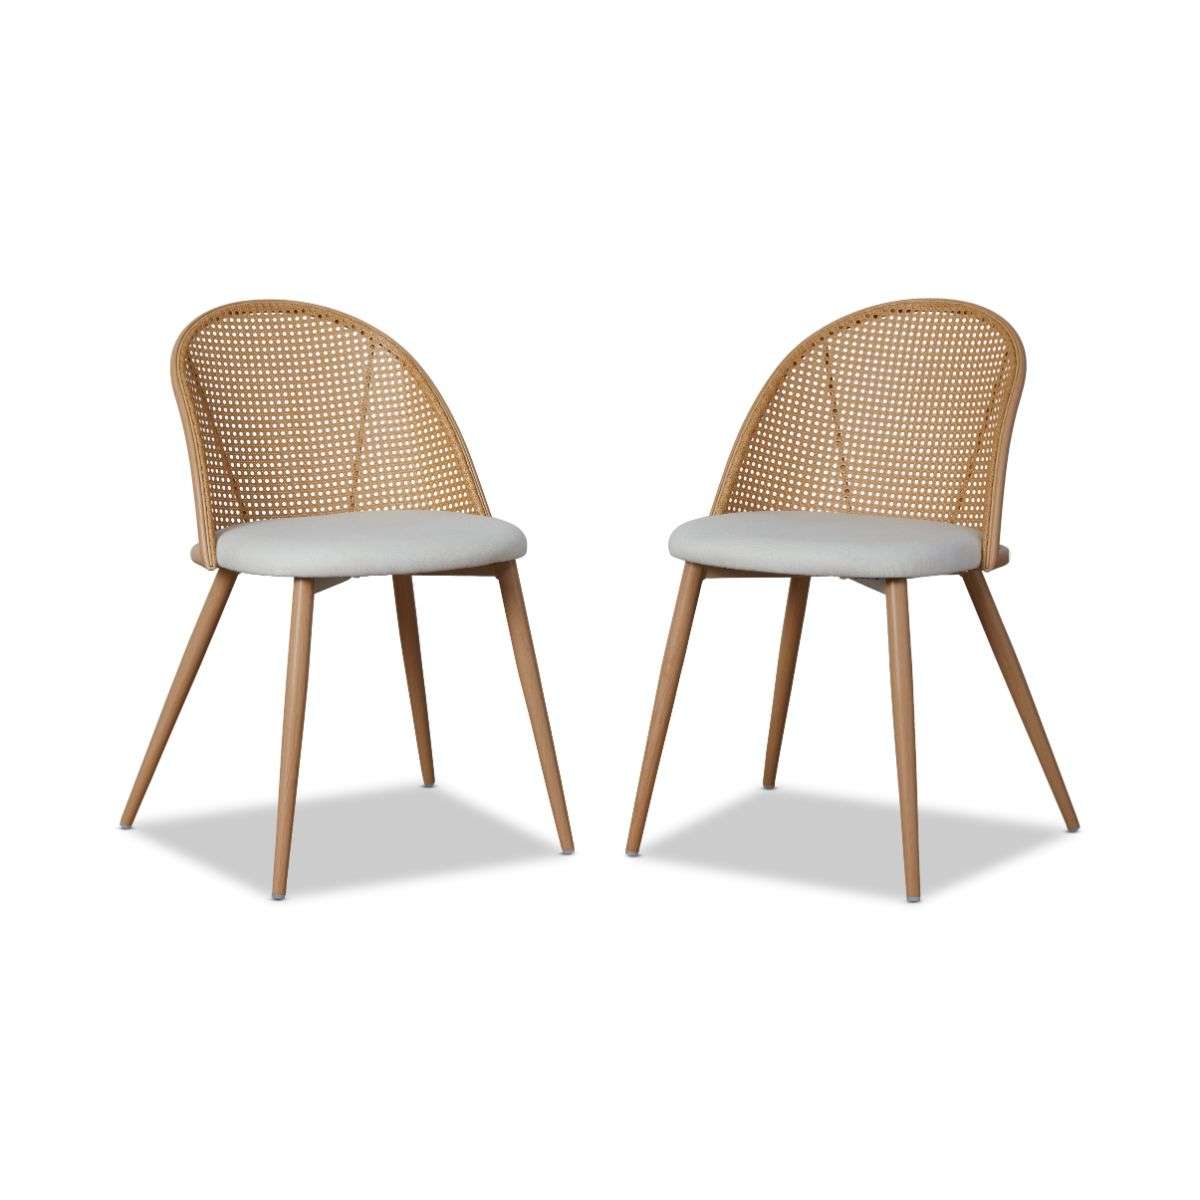 Avila Dining Chair - Set of 2 - Natural